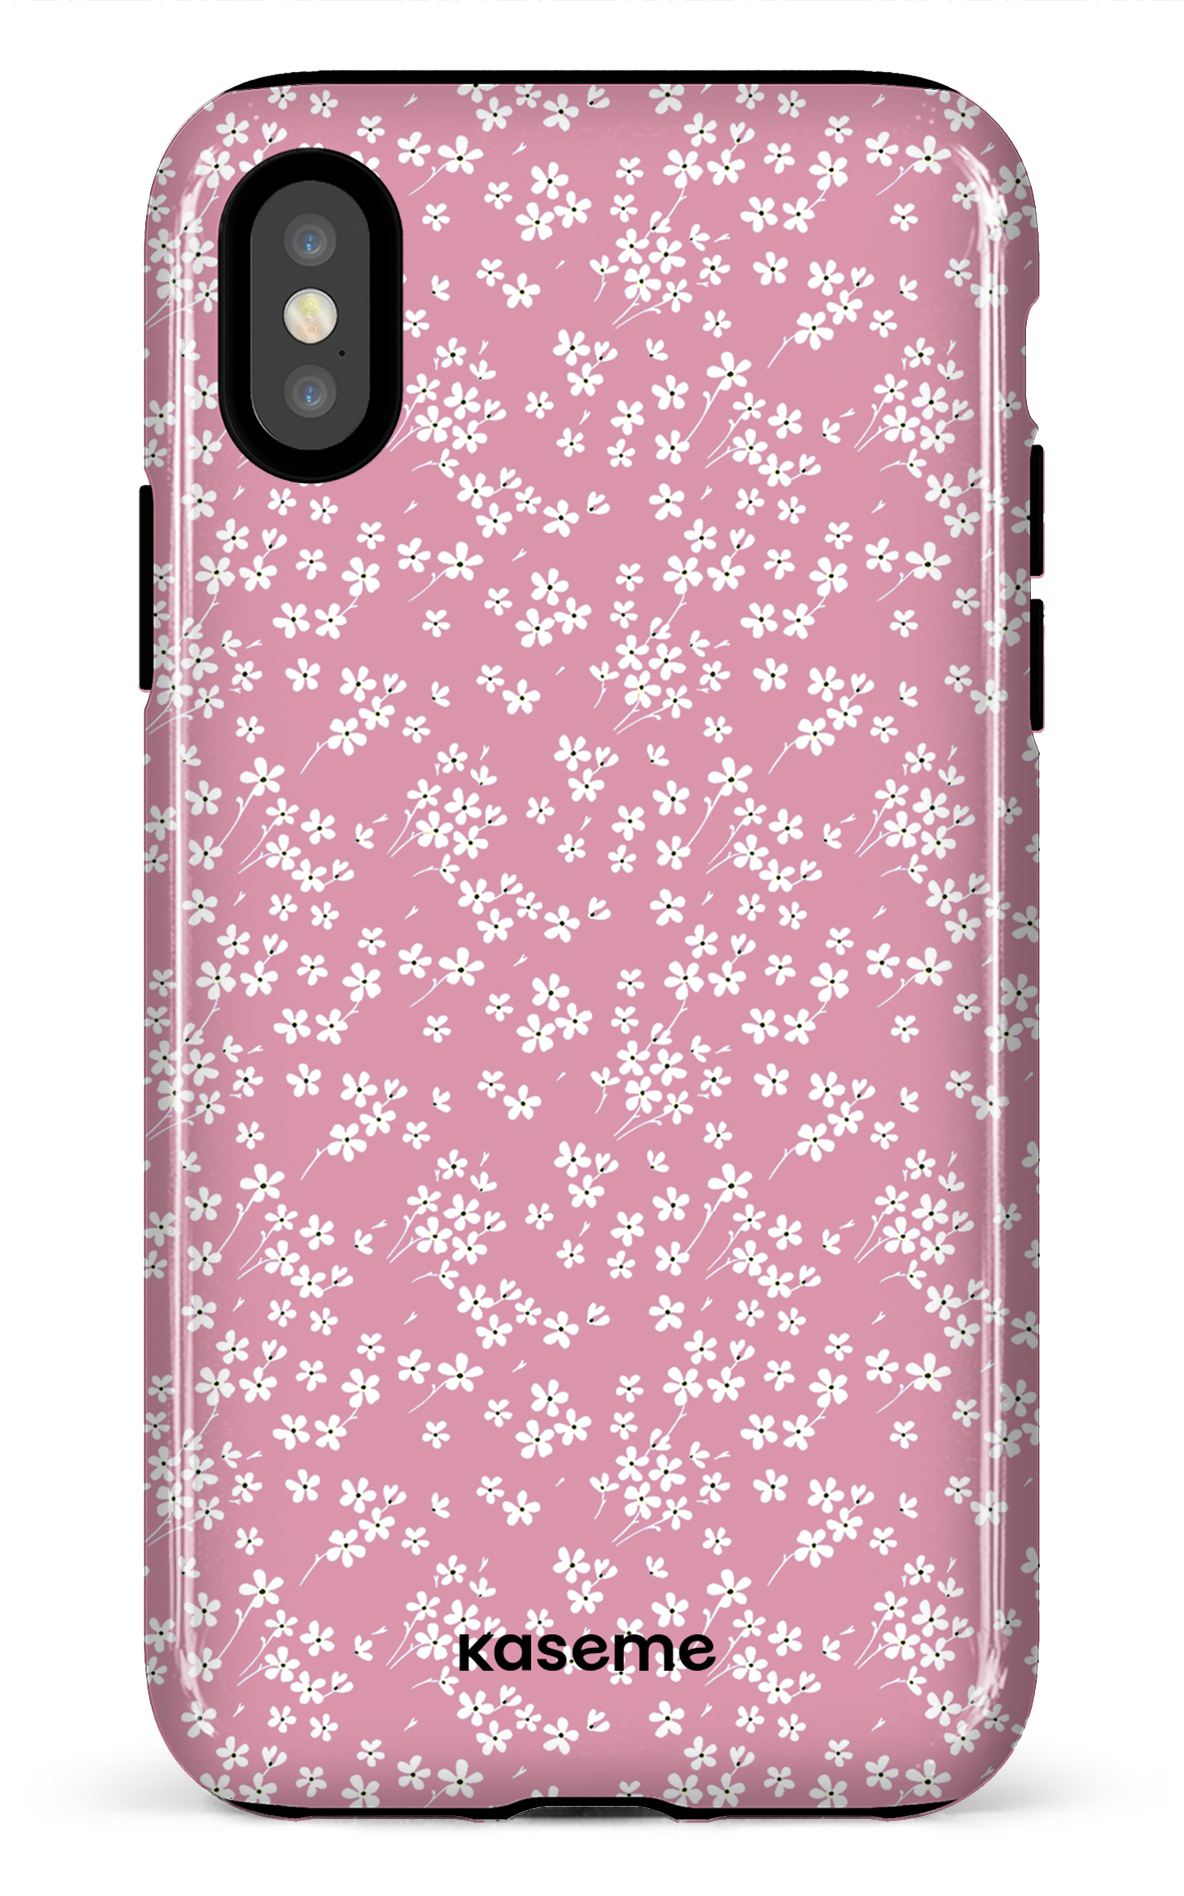 Posy pink - iPhone X/XS